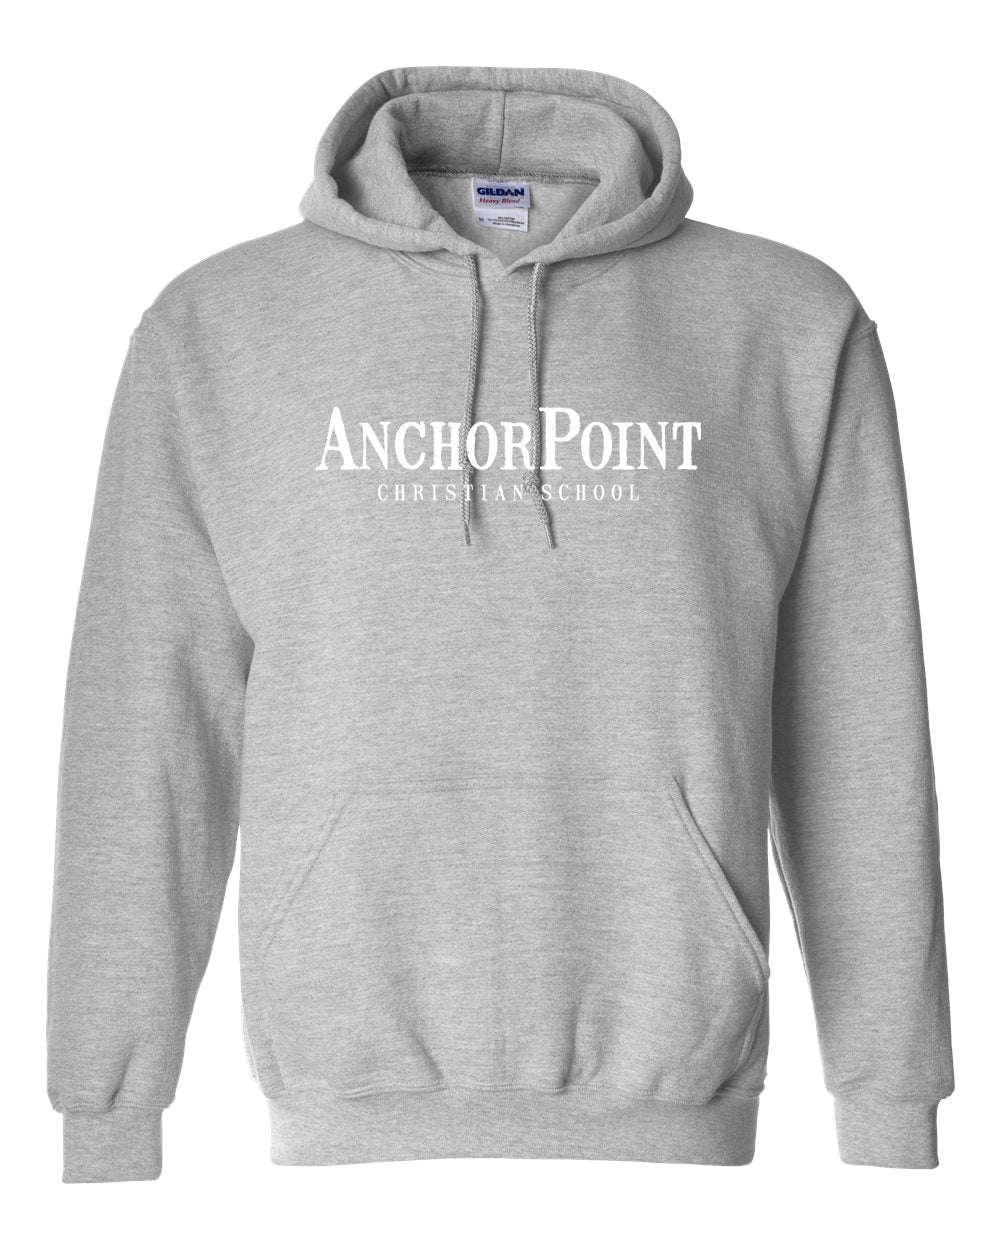 Anchor Point Hoodie Sweatshirt 18500 Option 2